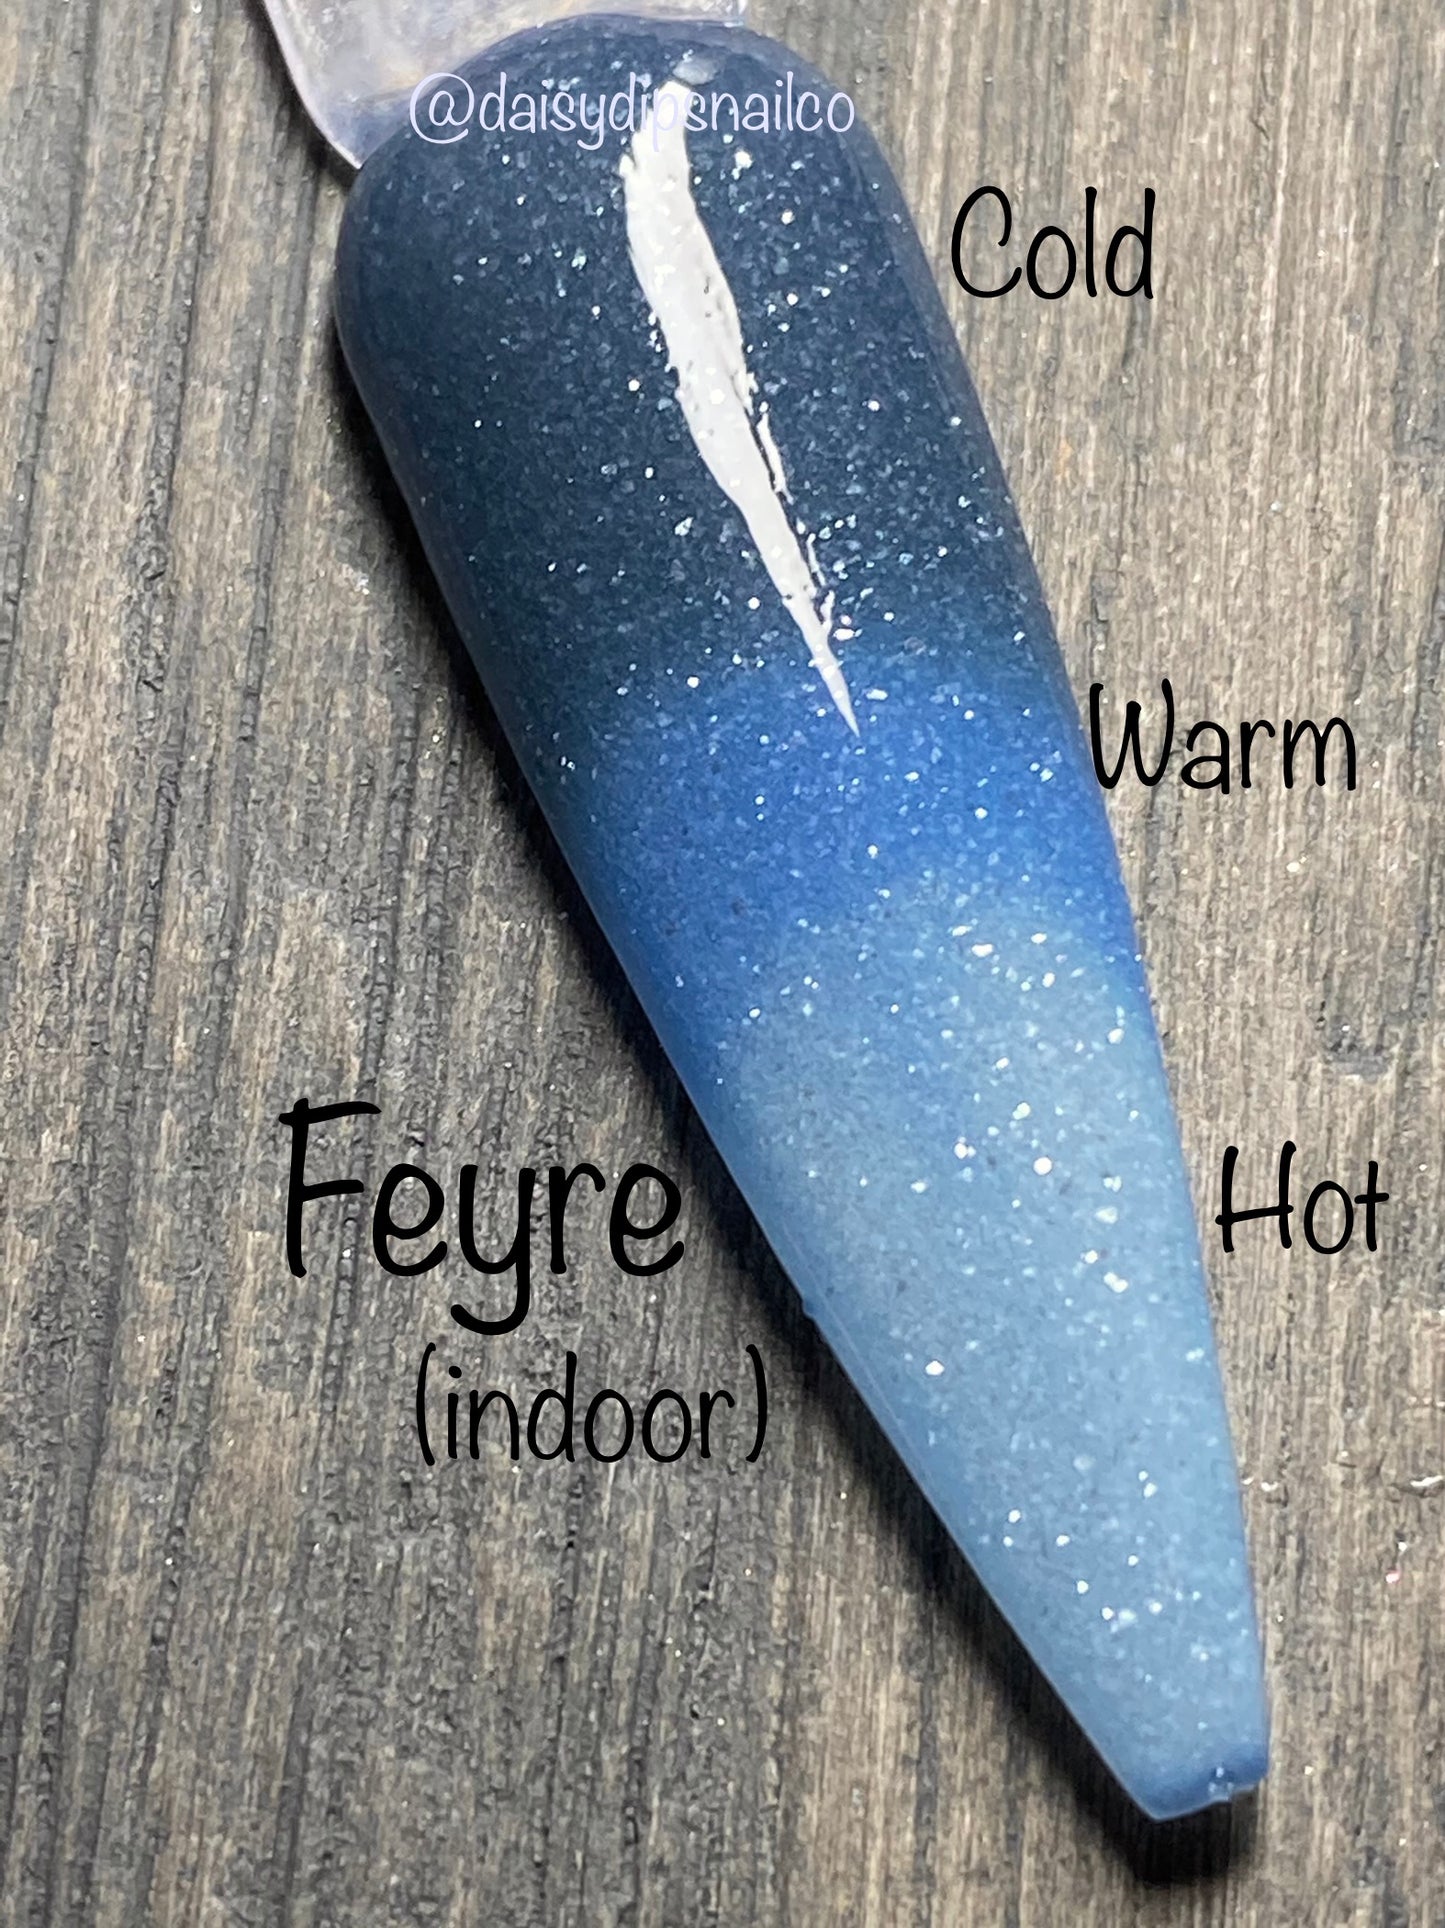 Feyre (Triple Thermal/UV/Glow)